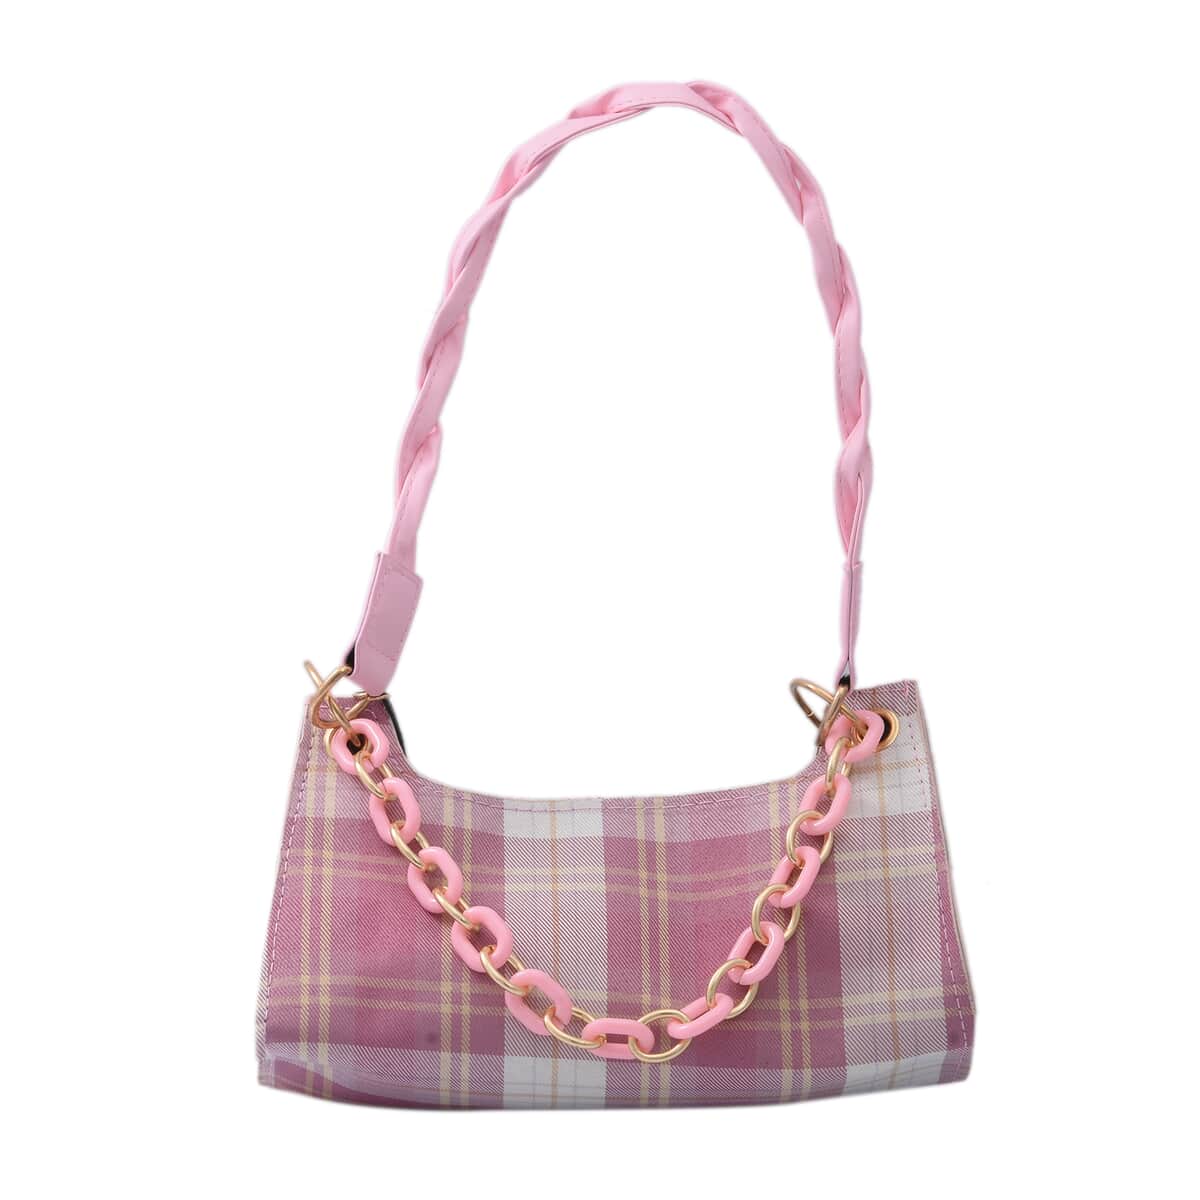 Royal Siamese Pink Color Check Pattern Mini Handbag